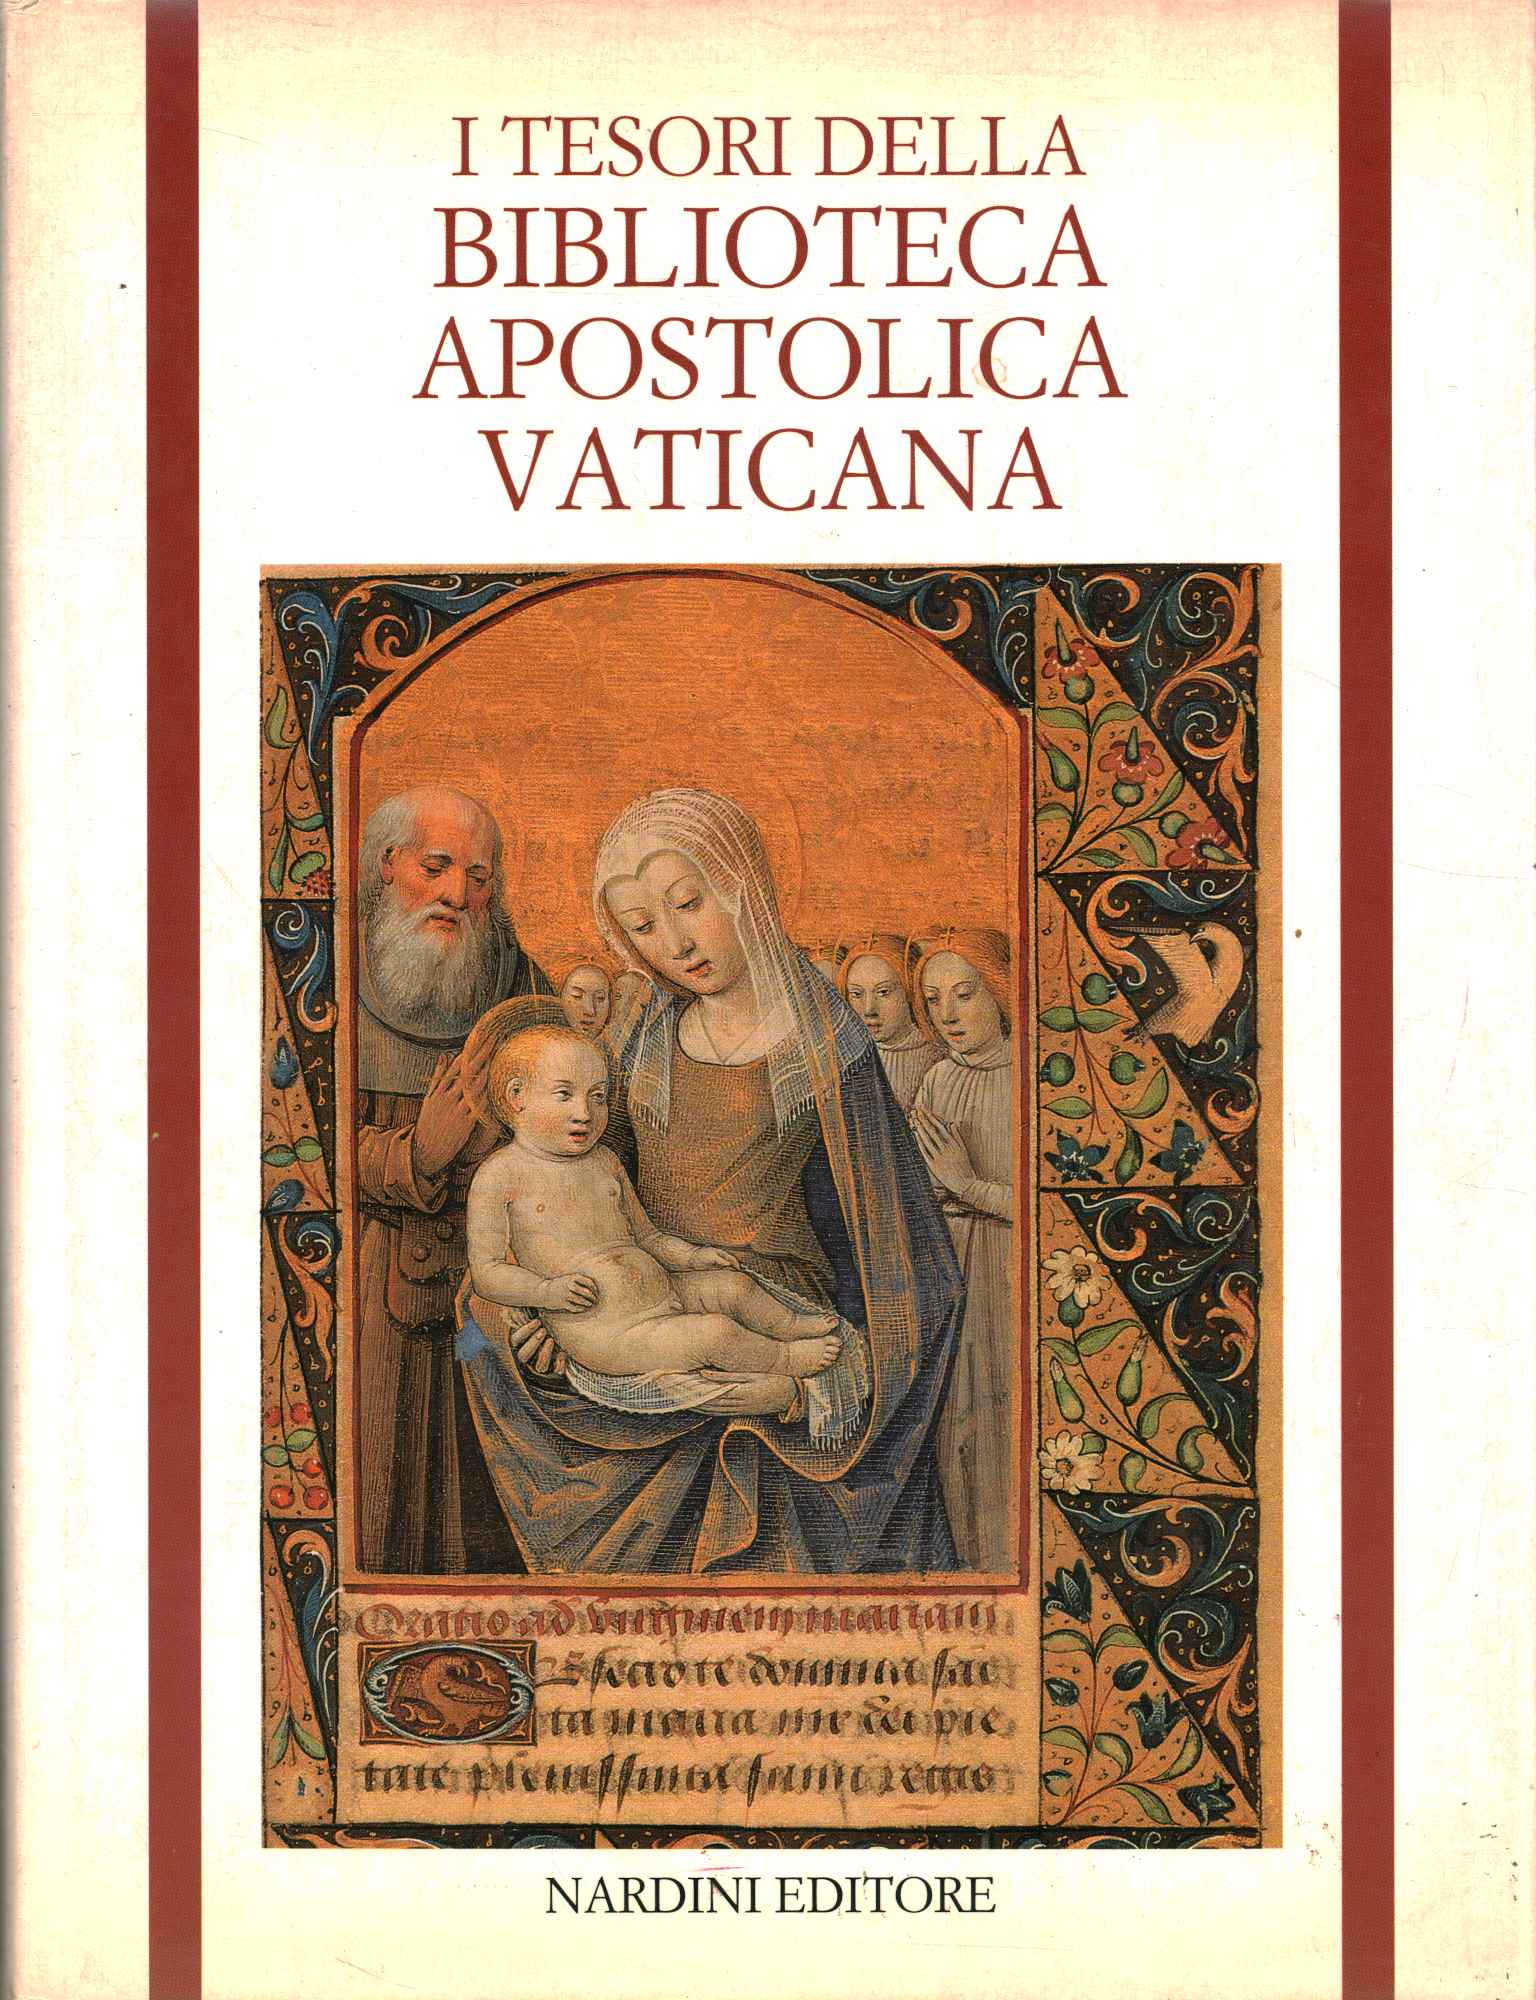 The treasures of the Vat Apostolic Library